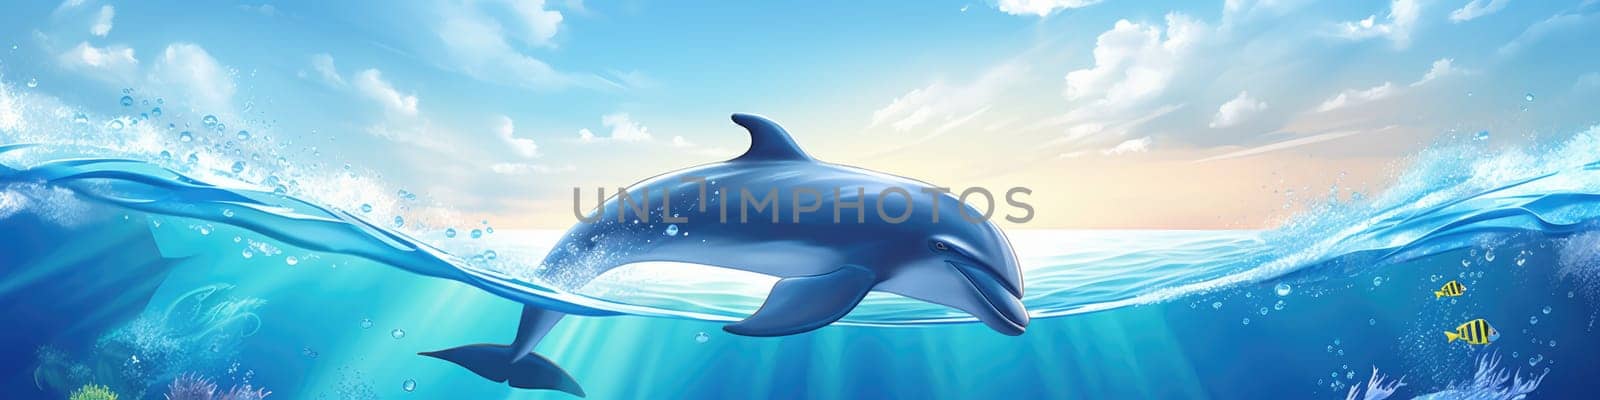 Doplhin at the sea, nature wildlife concept by Kadula